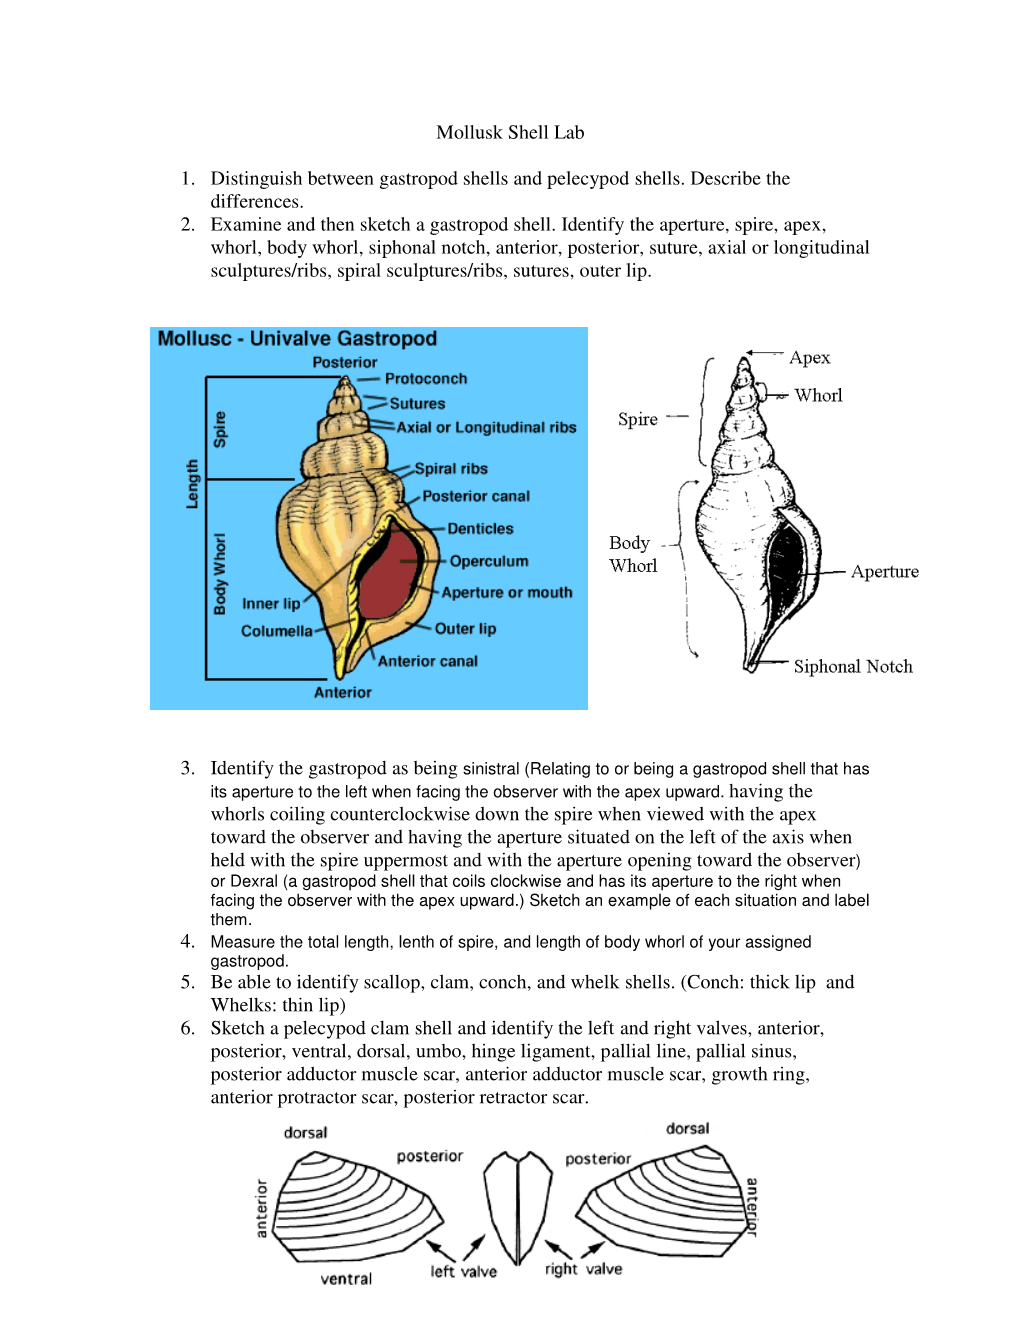 Mollusk Shell Lab 1. Distinguish Between Gastropod Shells And